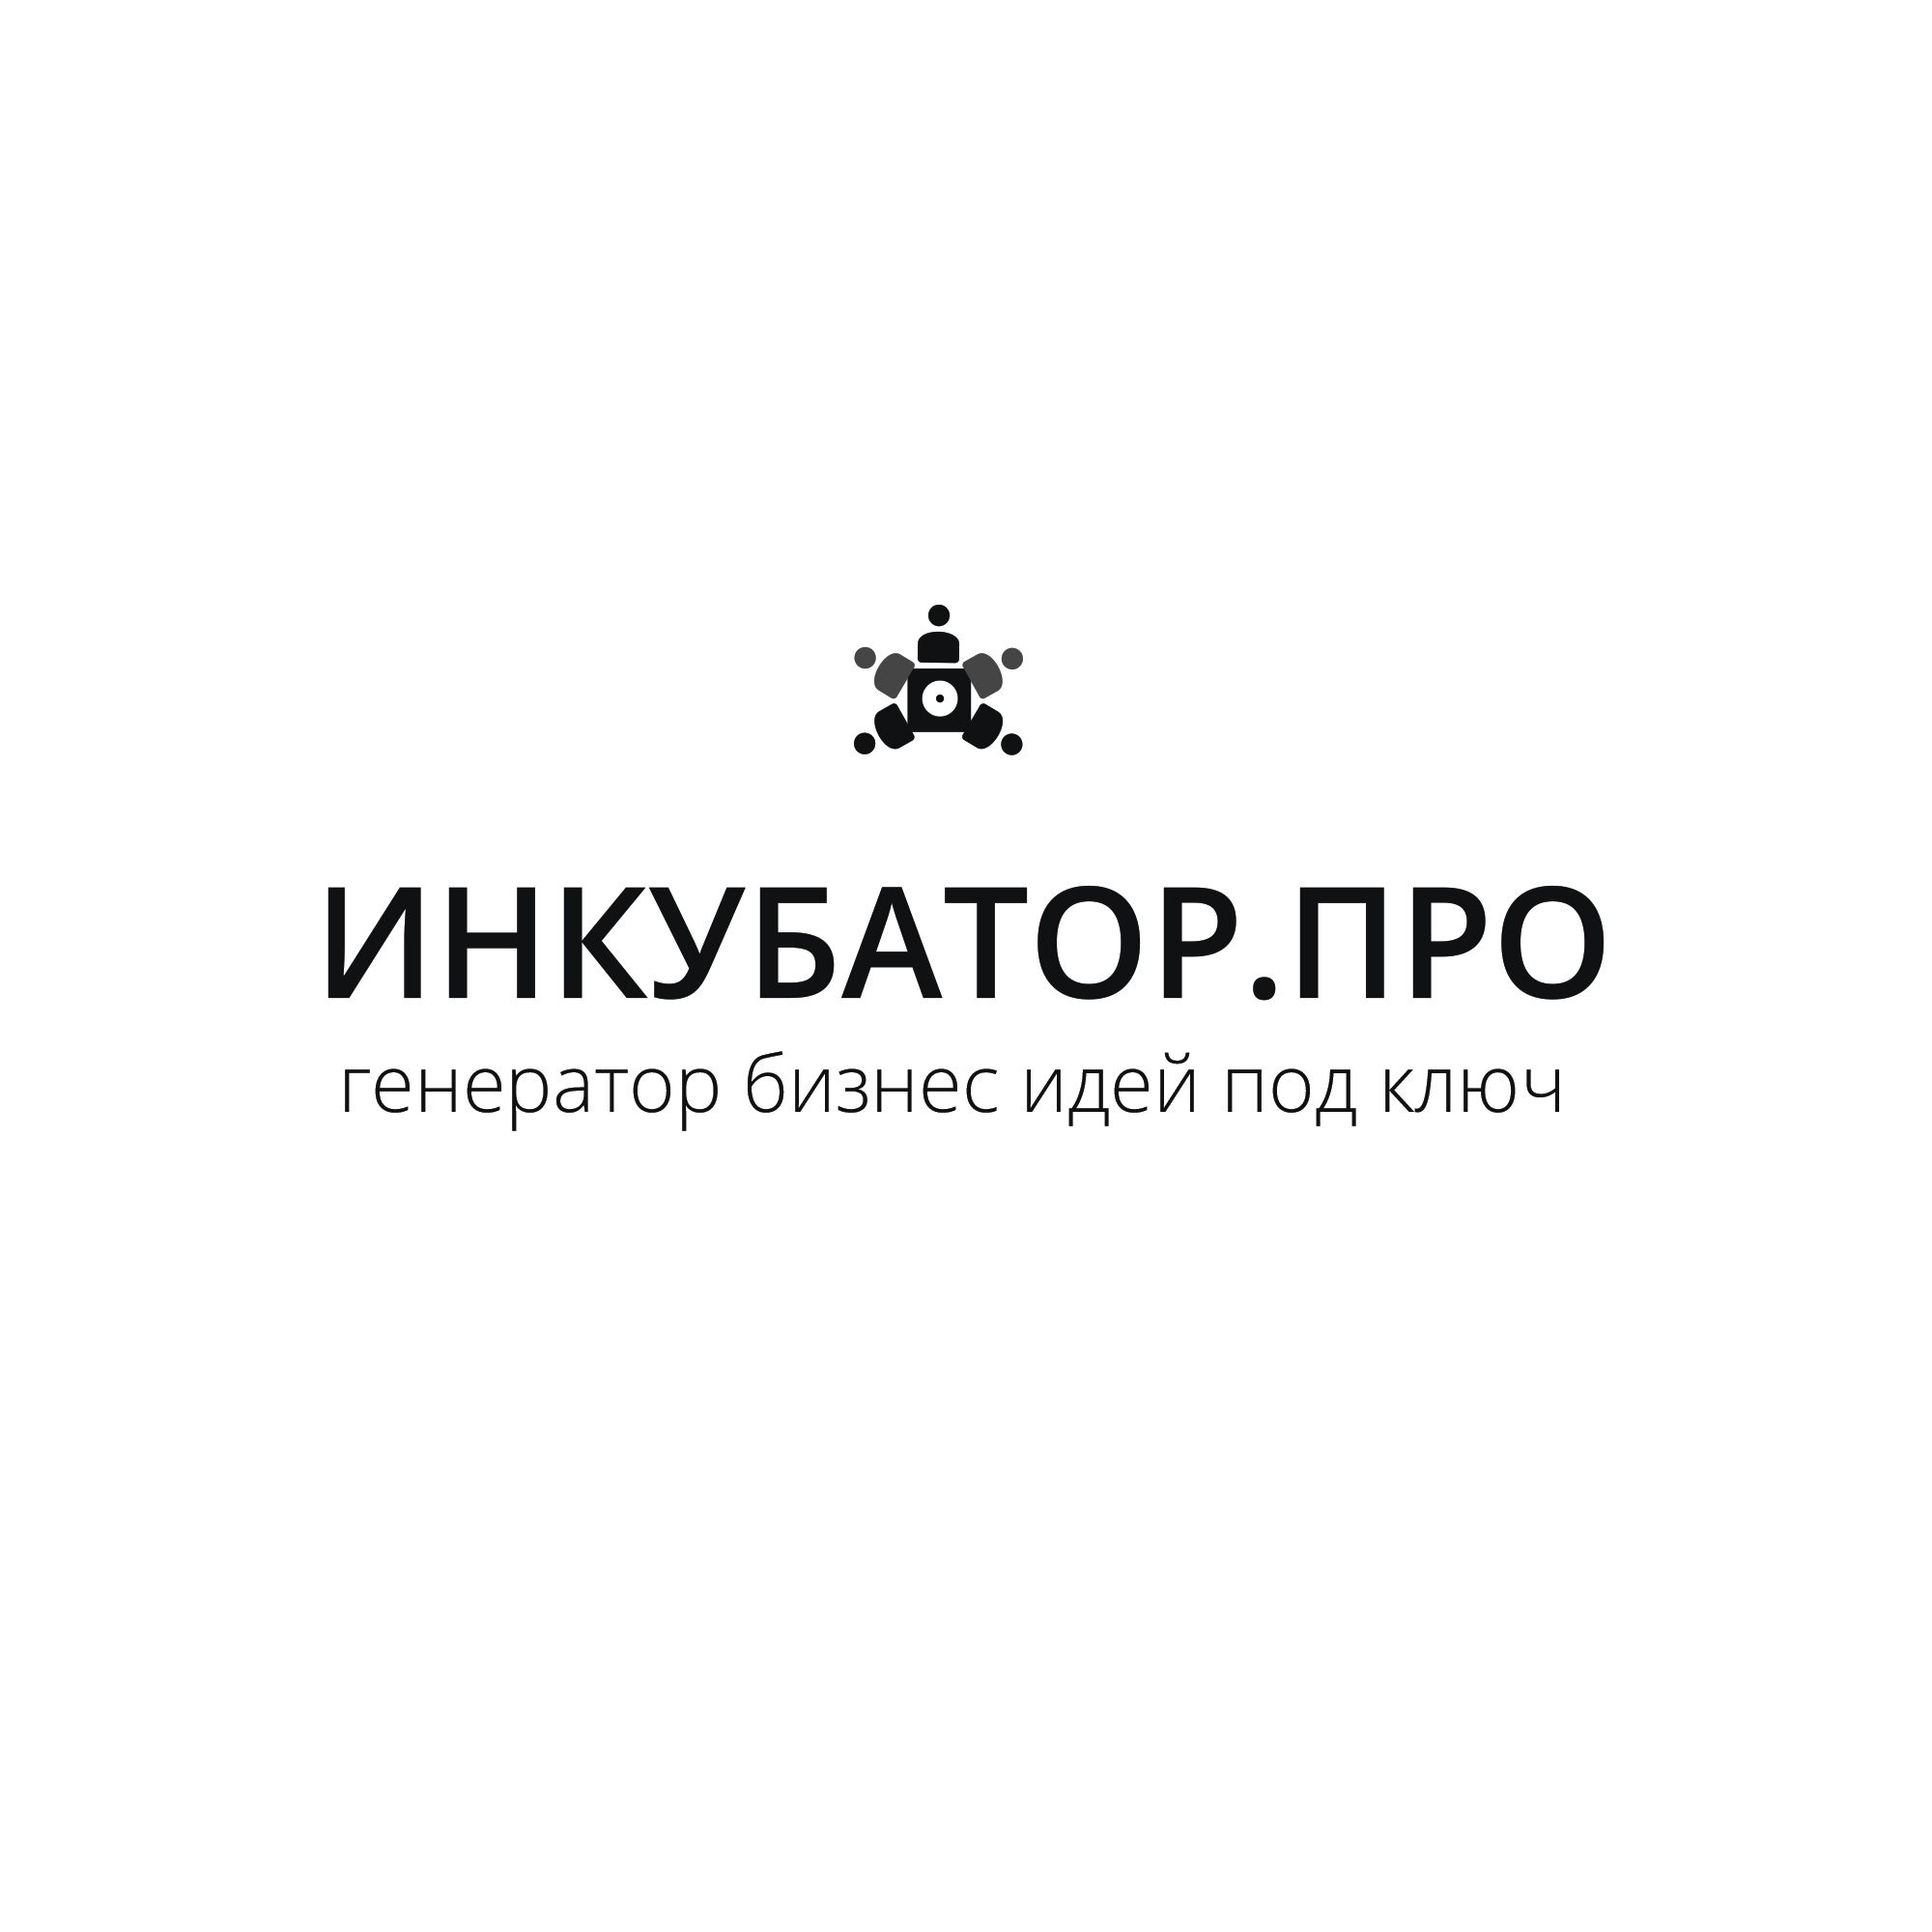 Логотип для инкубатор.про - дизайнер Titosha